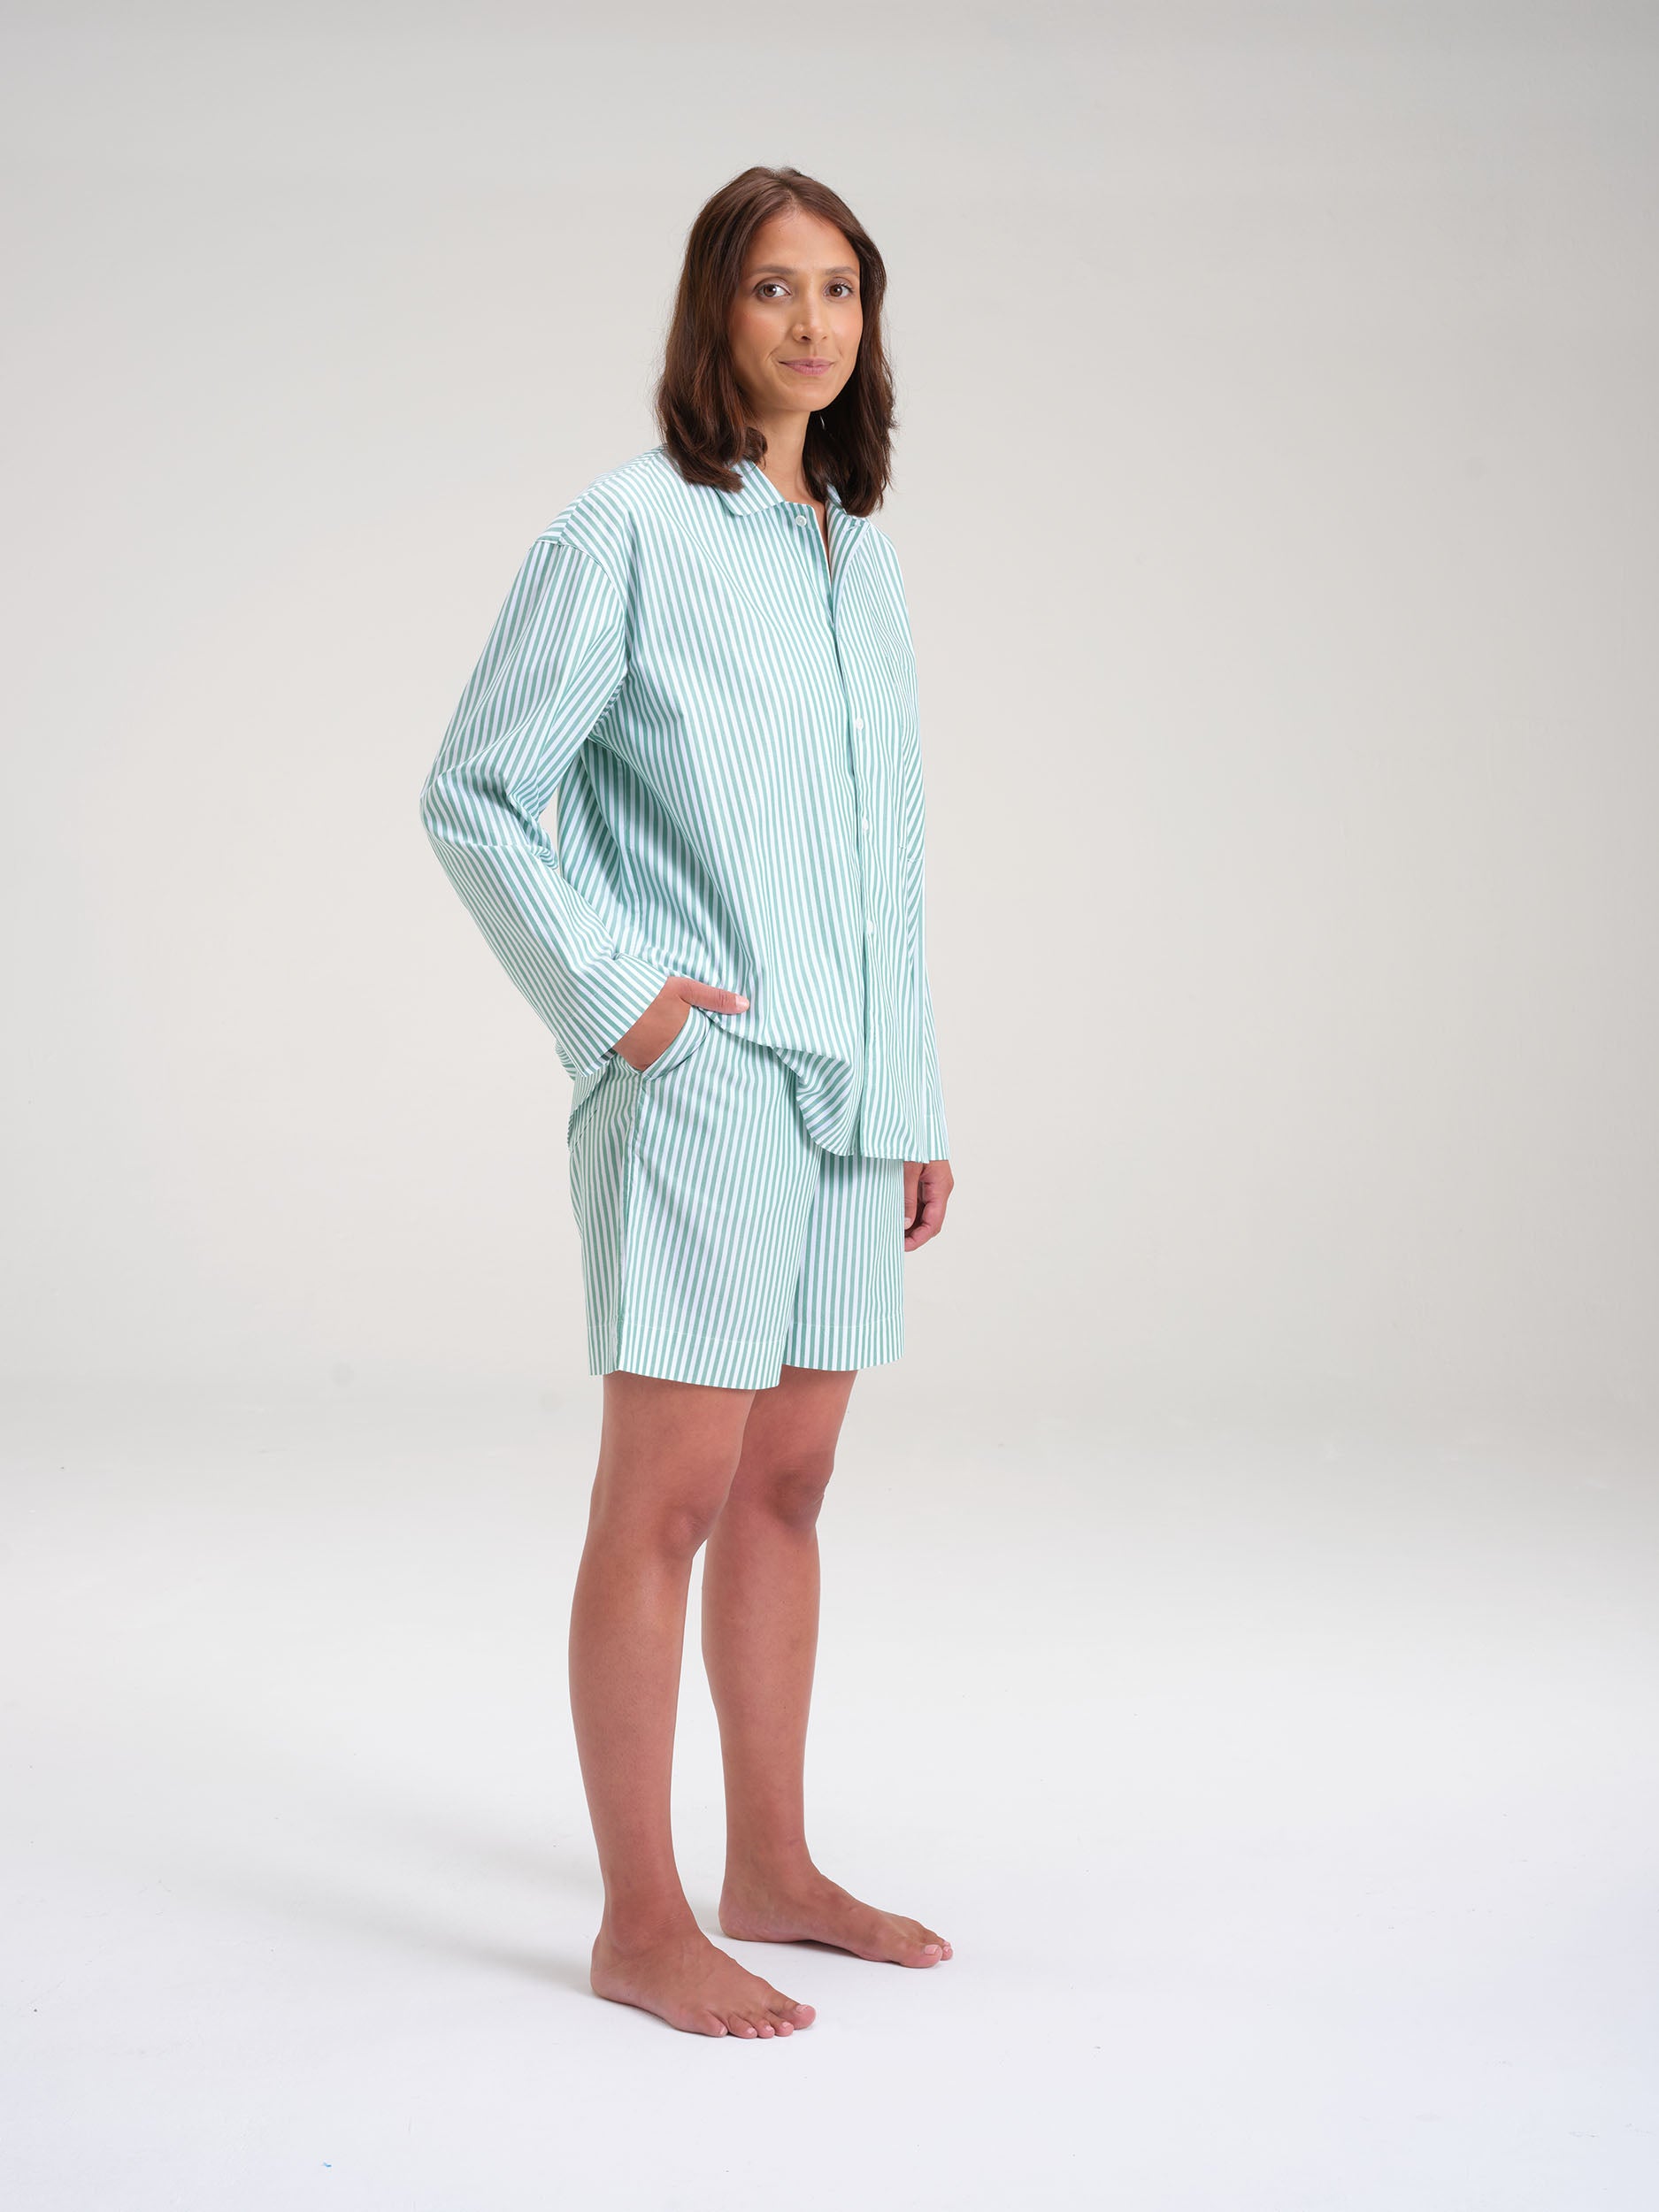 Pyjama Set (Shirt+ Shorts) - gratitude green stripe